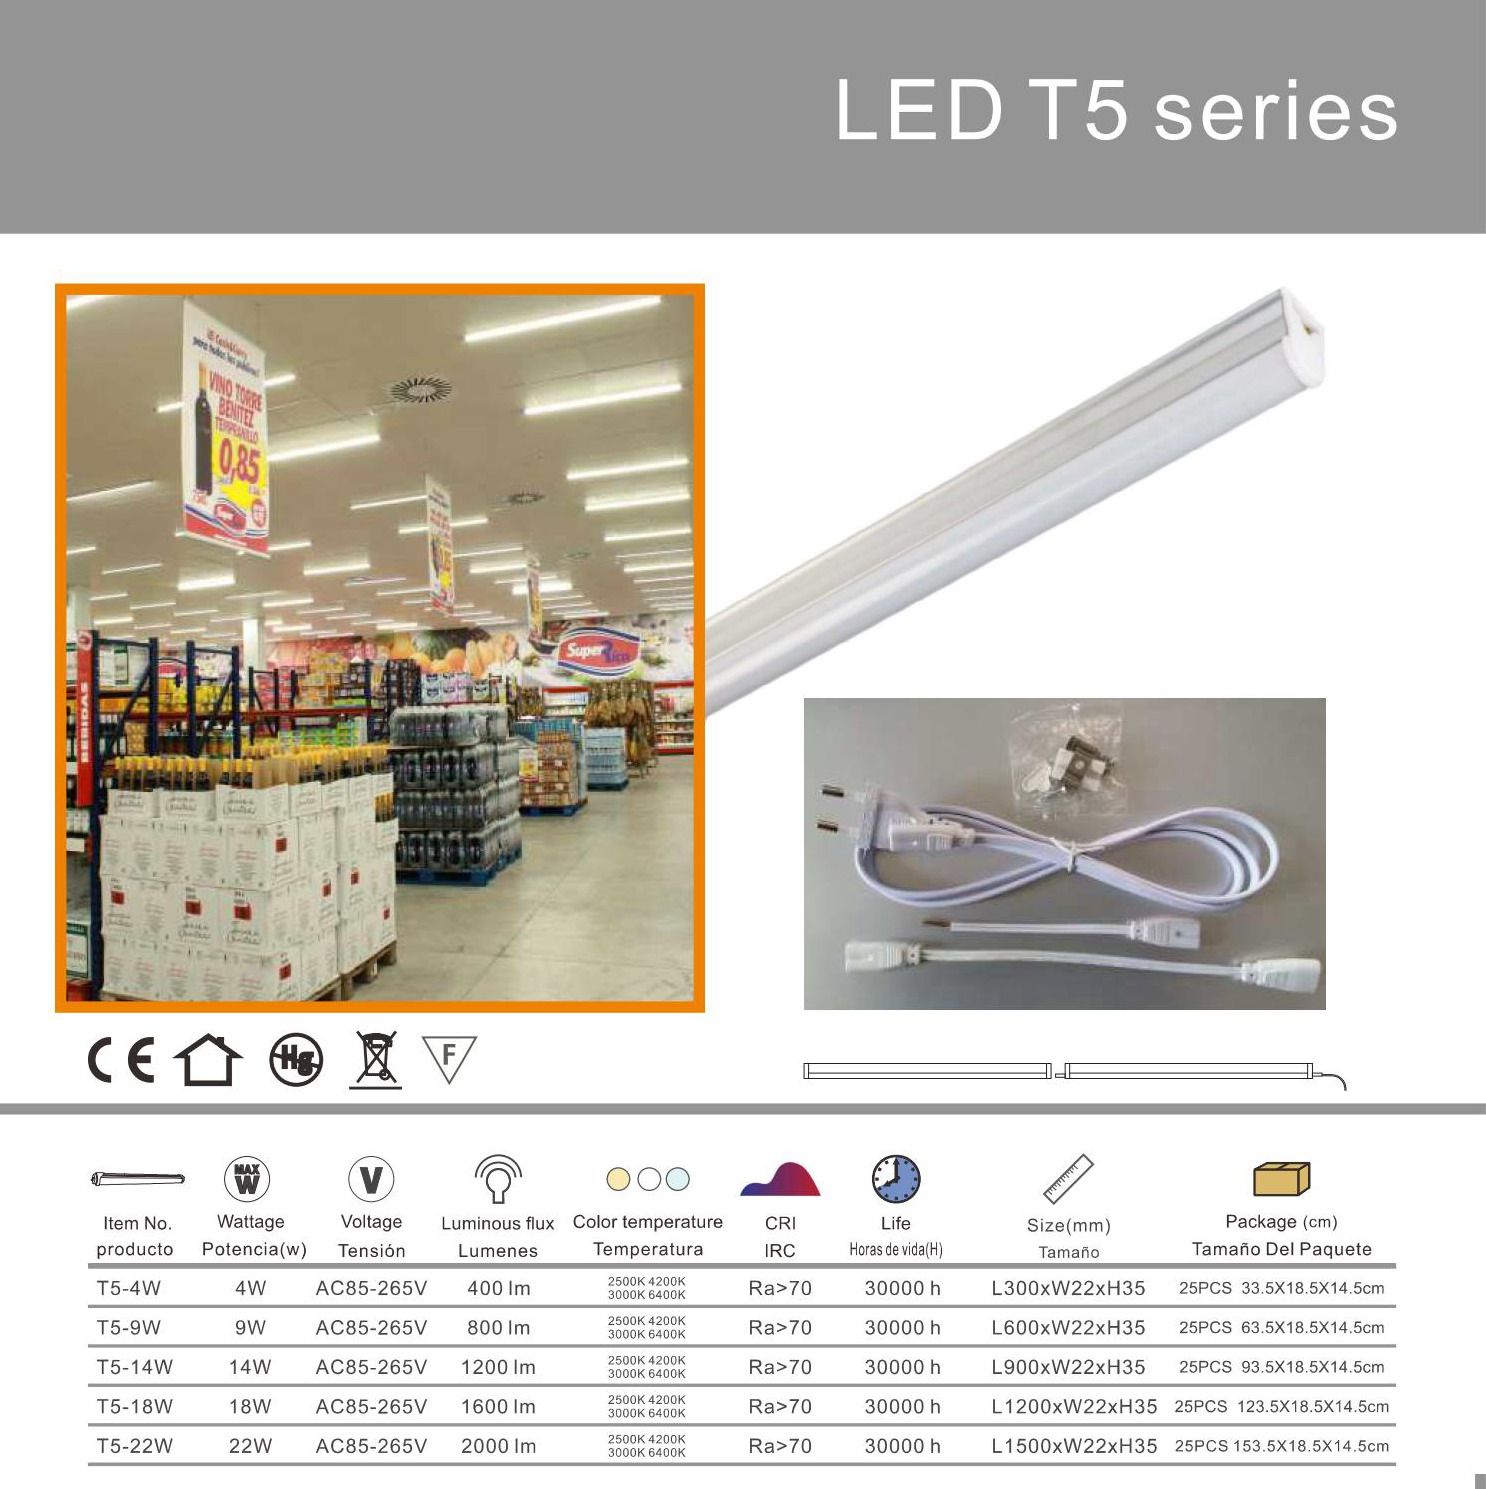 LED T5 series